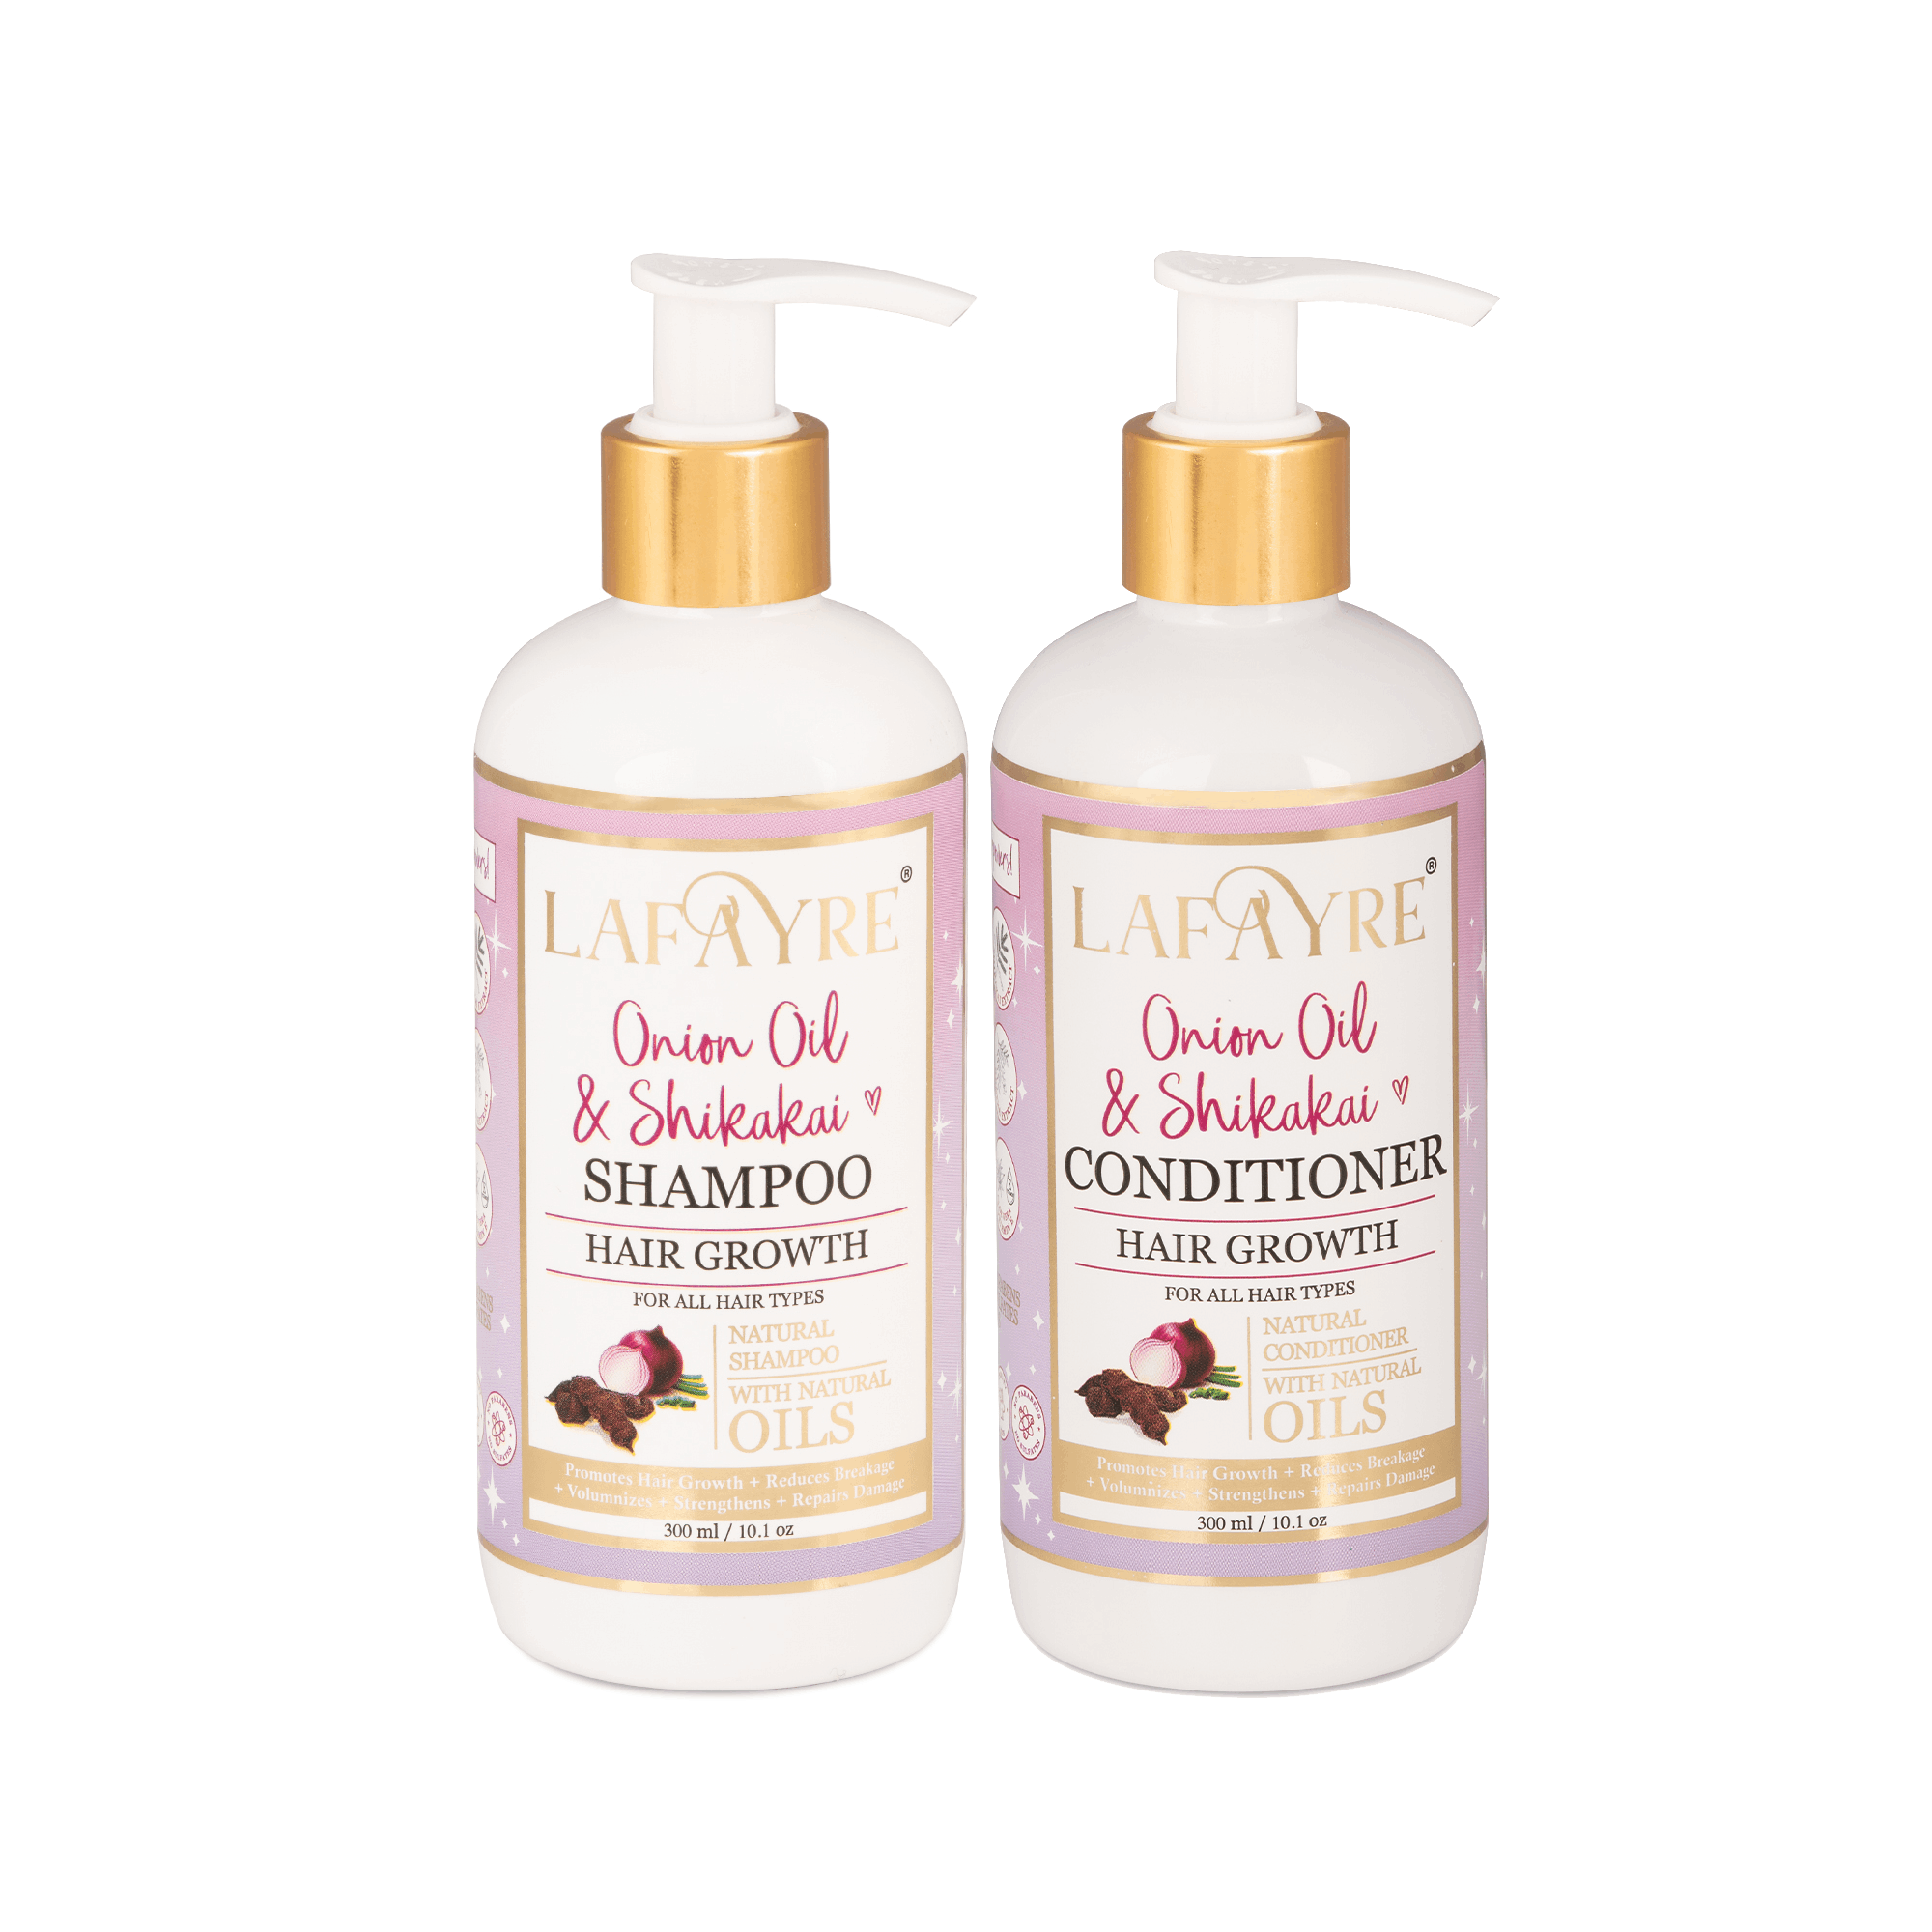 Onion Oil & Shikakai Hair Growth Shampoo & Conditioner - LAFAYRE